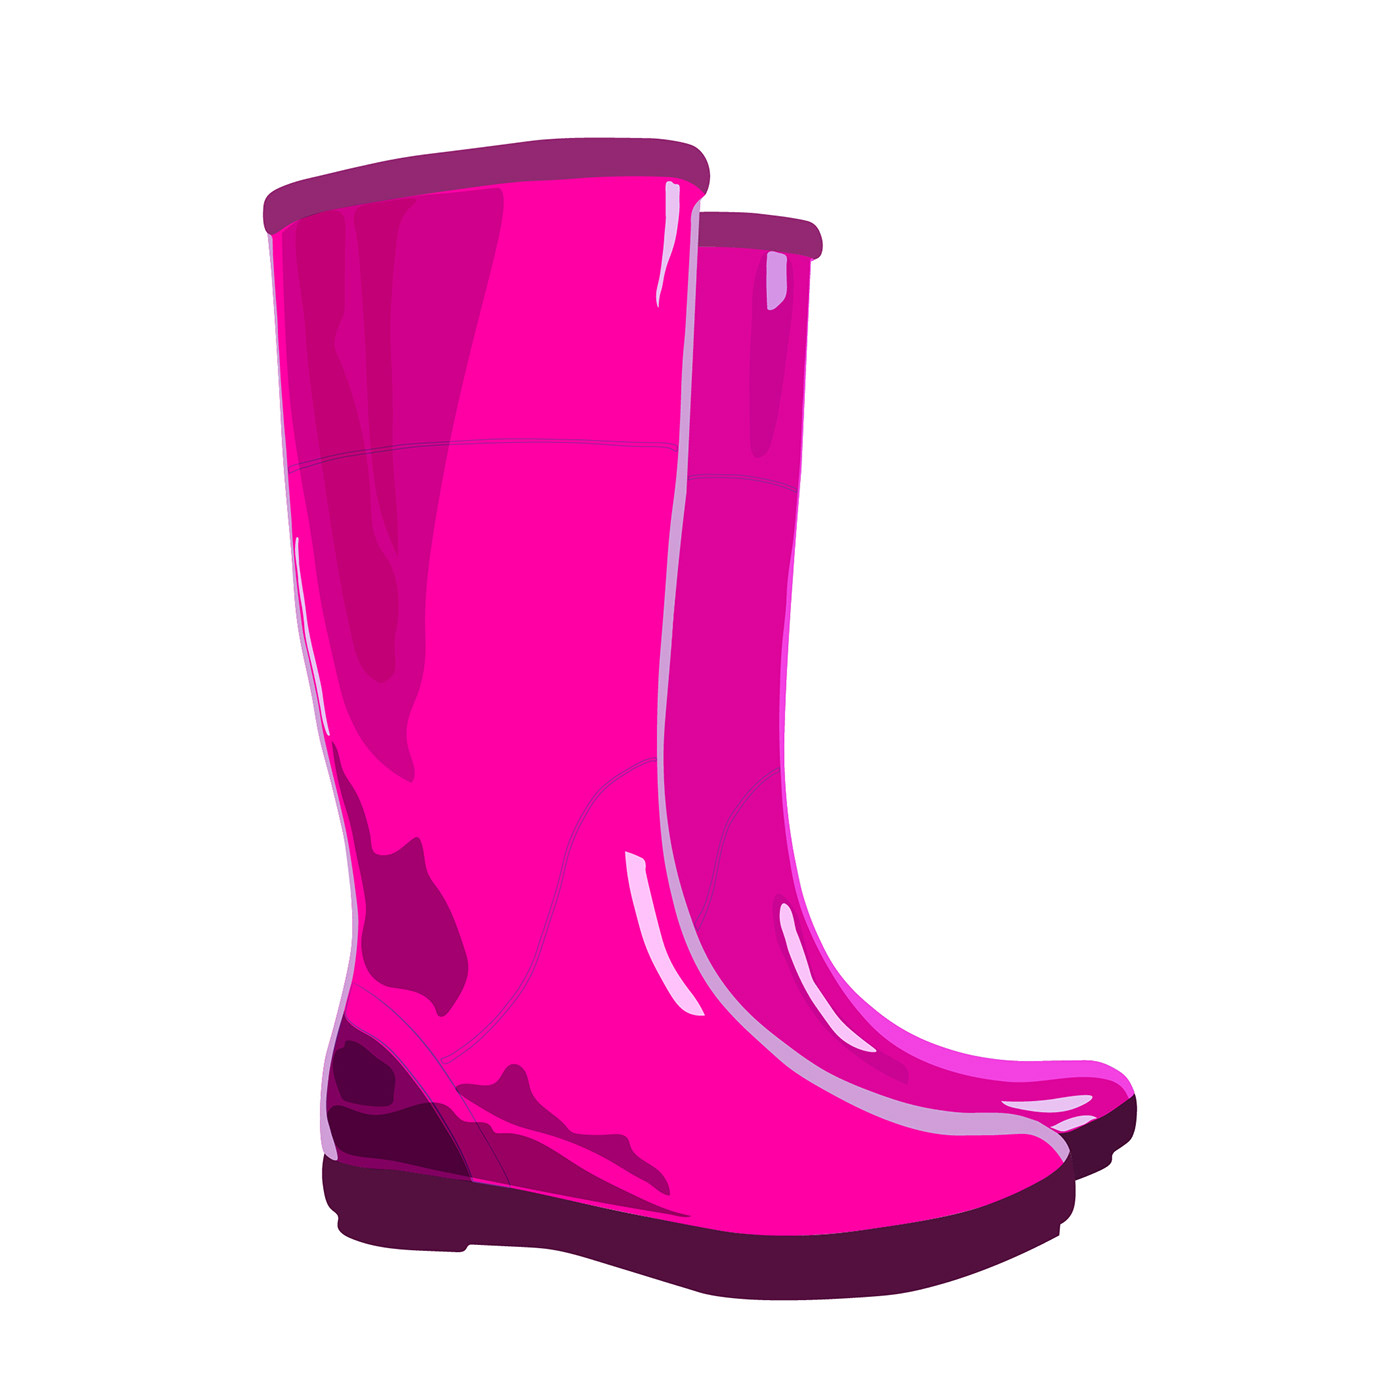 #rainboots #bootillustratuin #rubberboots #pink #brightcolor #shoes  